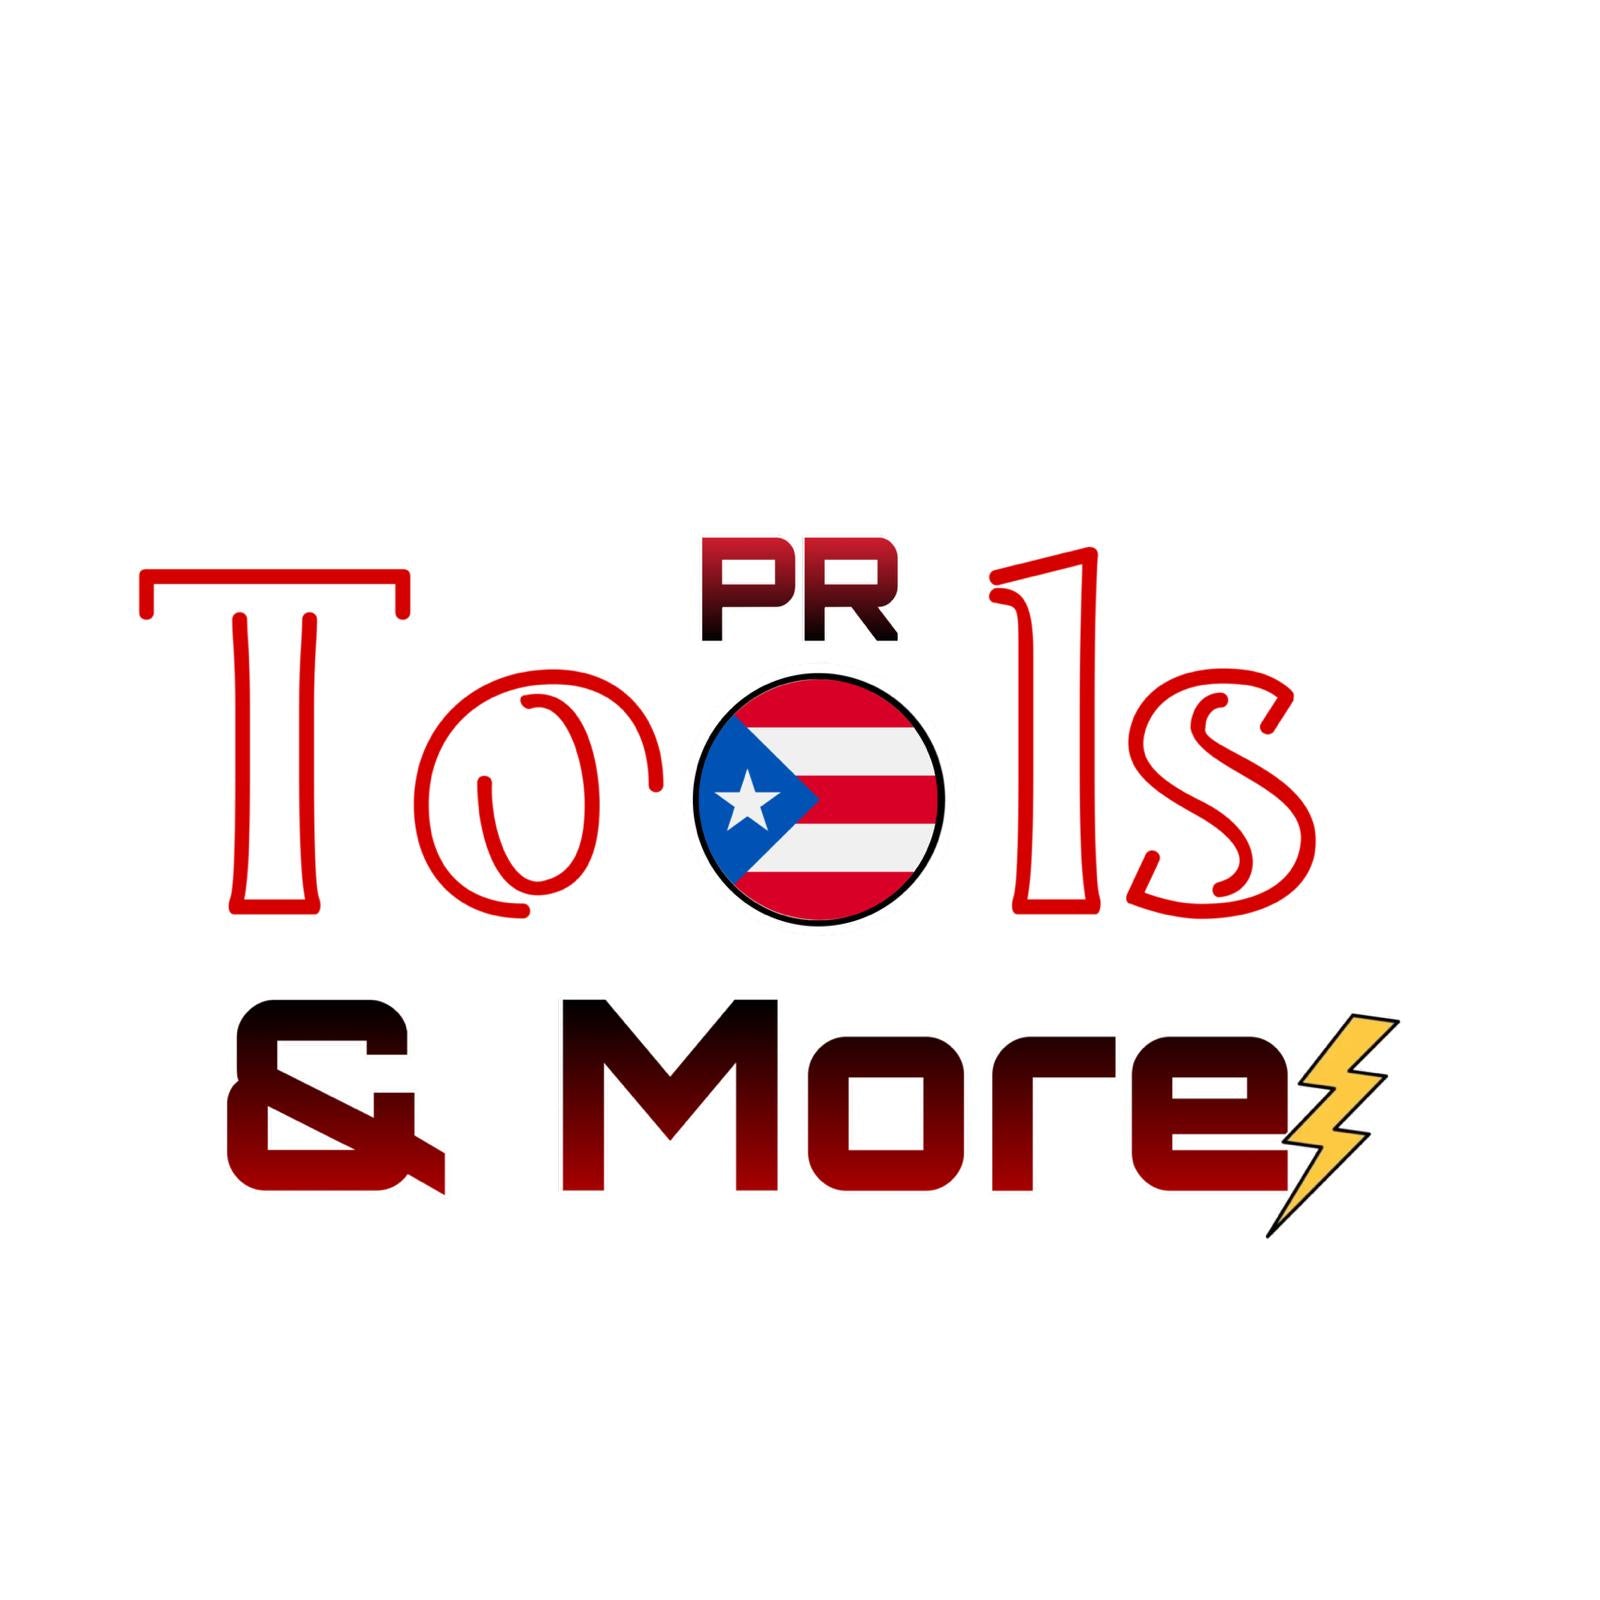 PR Tools & More